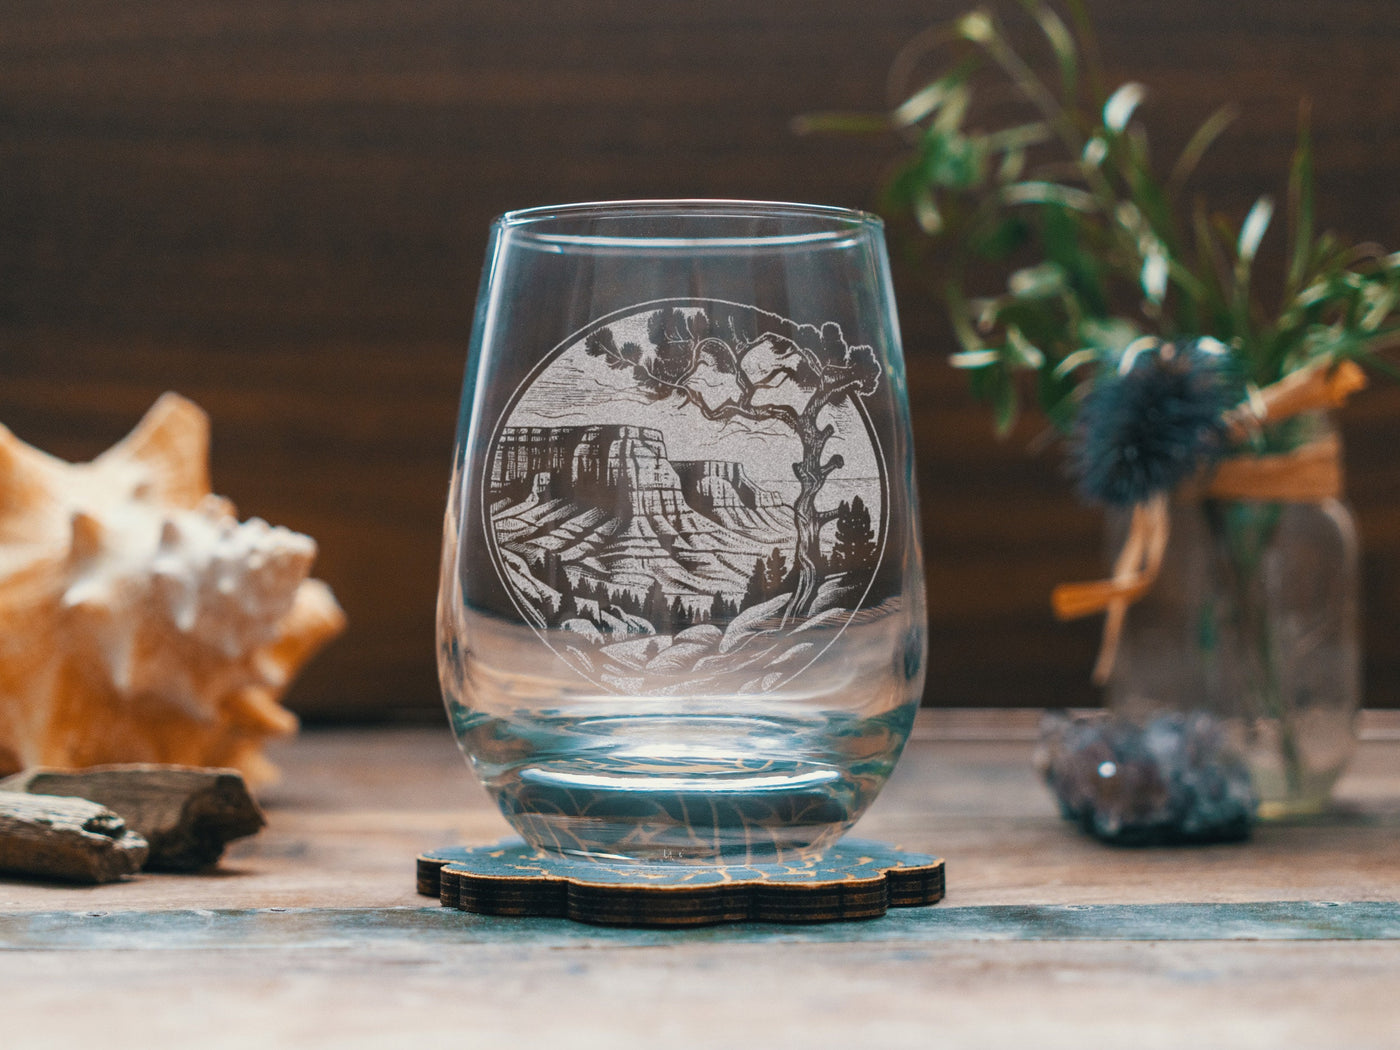 Desert Tree Landscape Scene Glasses | Personalized etched glassware for beer, whiskey, wine & cocktails. Western Scene, Southwestern Decor.